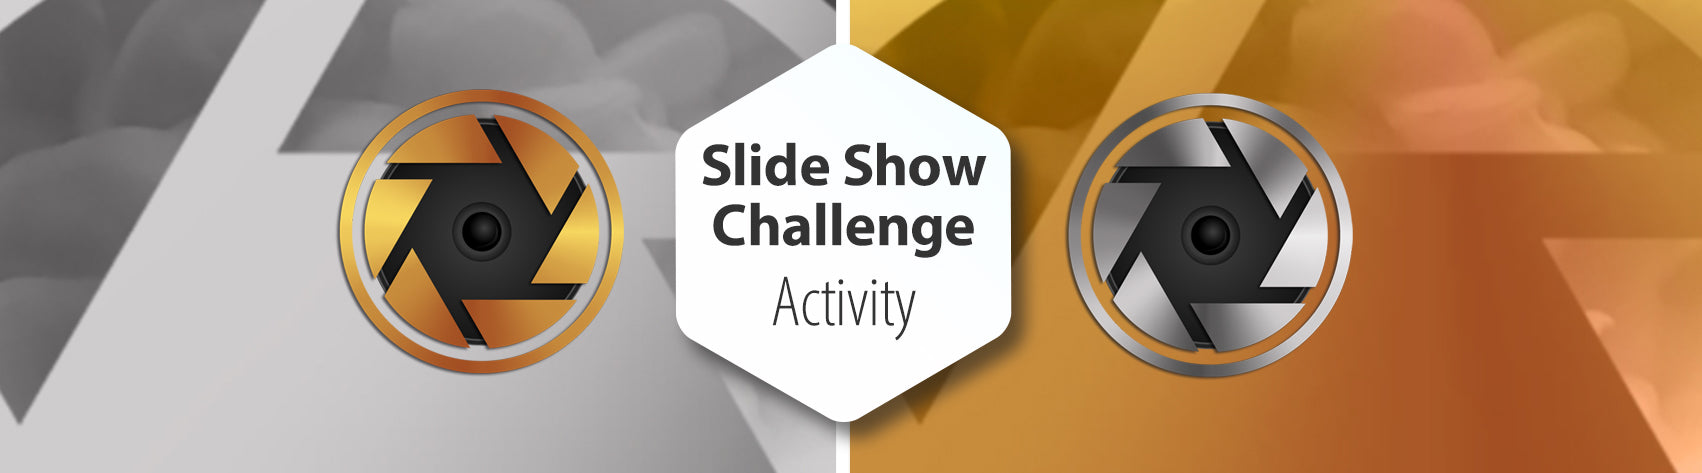 Slide Show Challenge - Activity